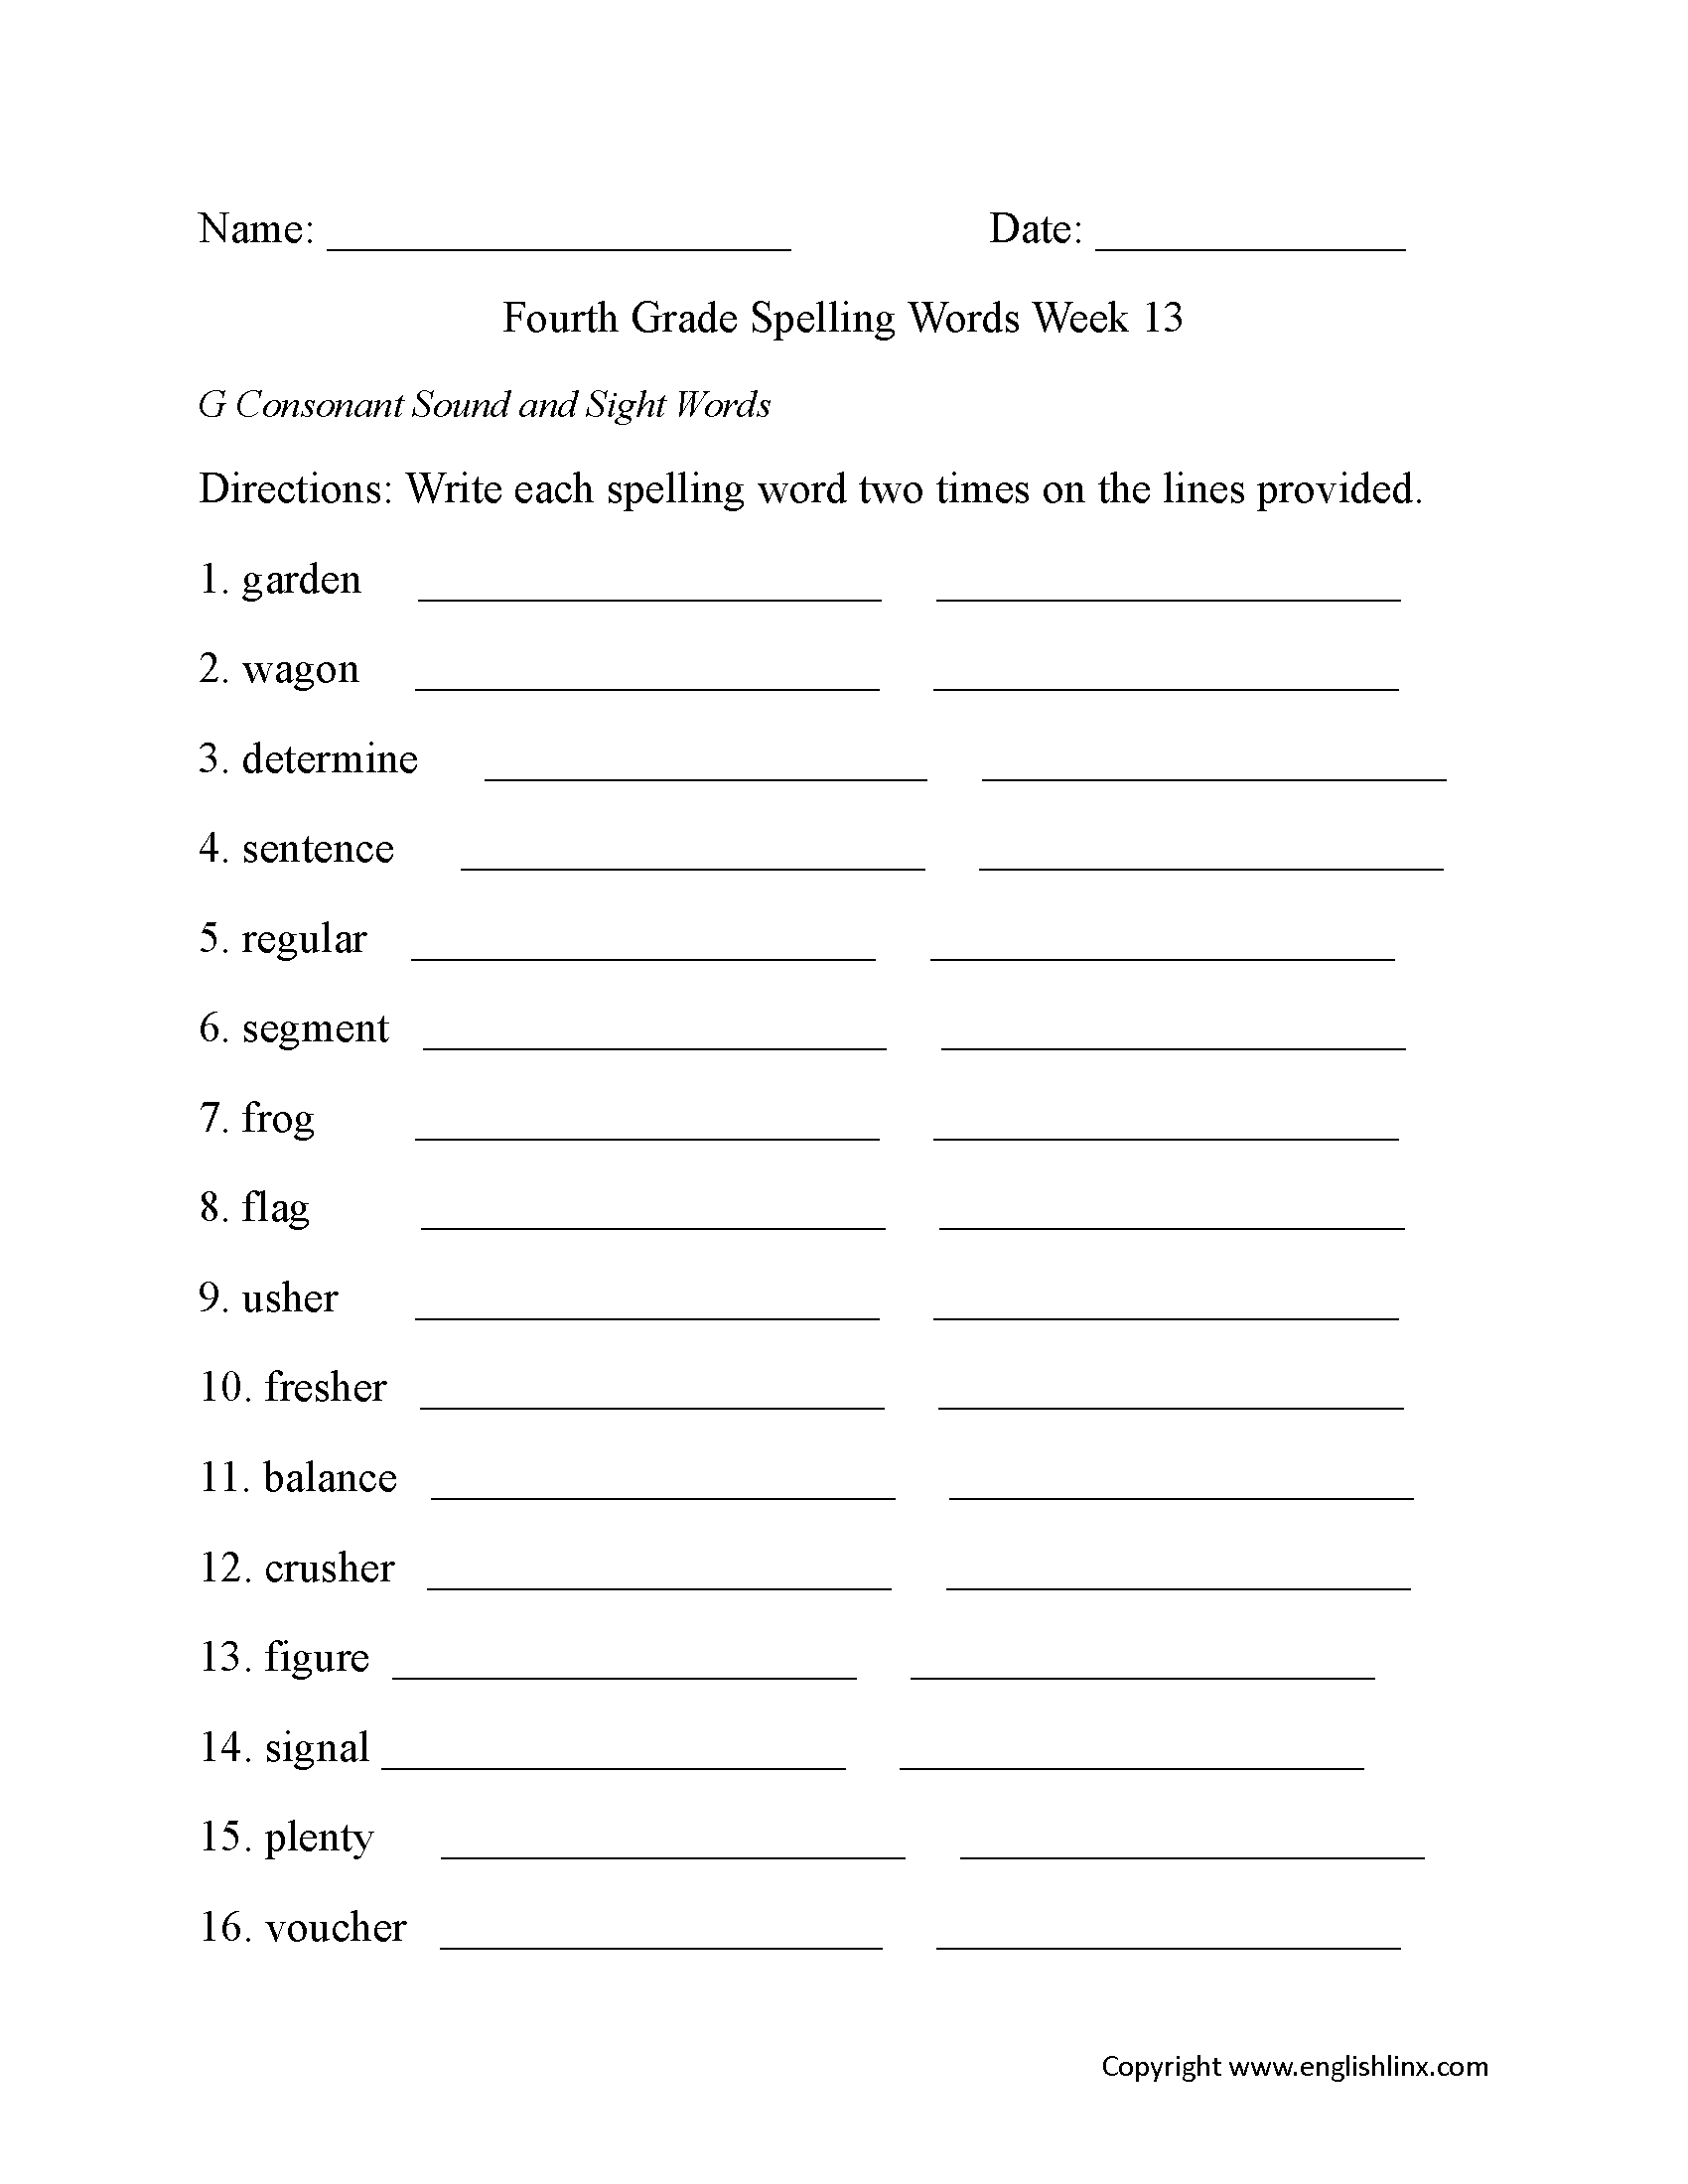 Englishlinx Spelling Worksheets